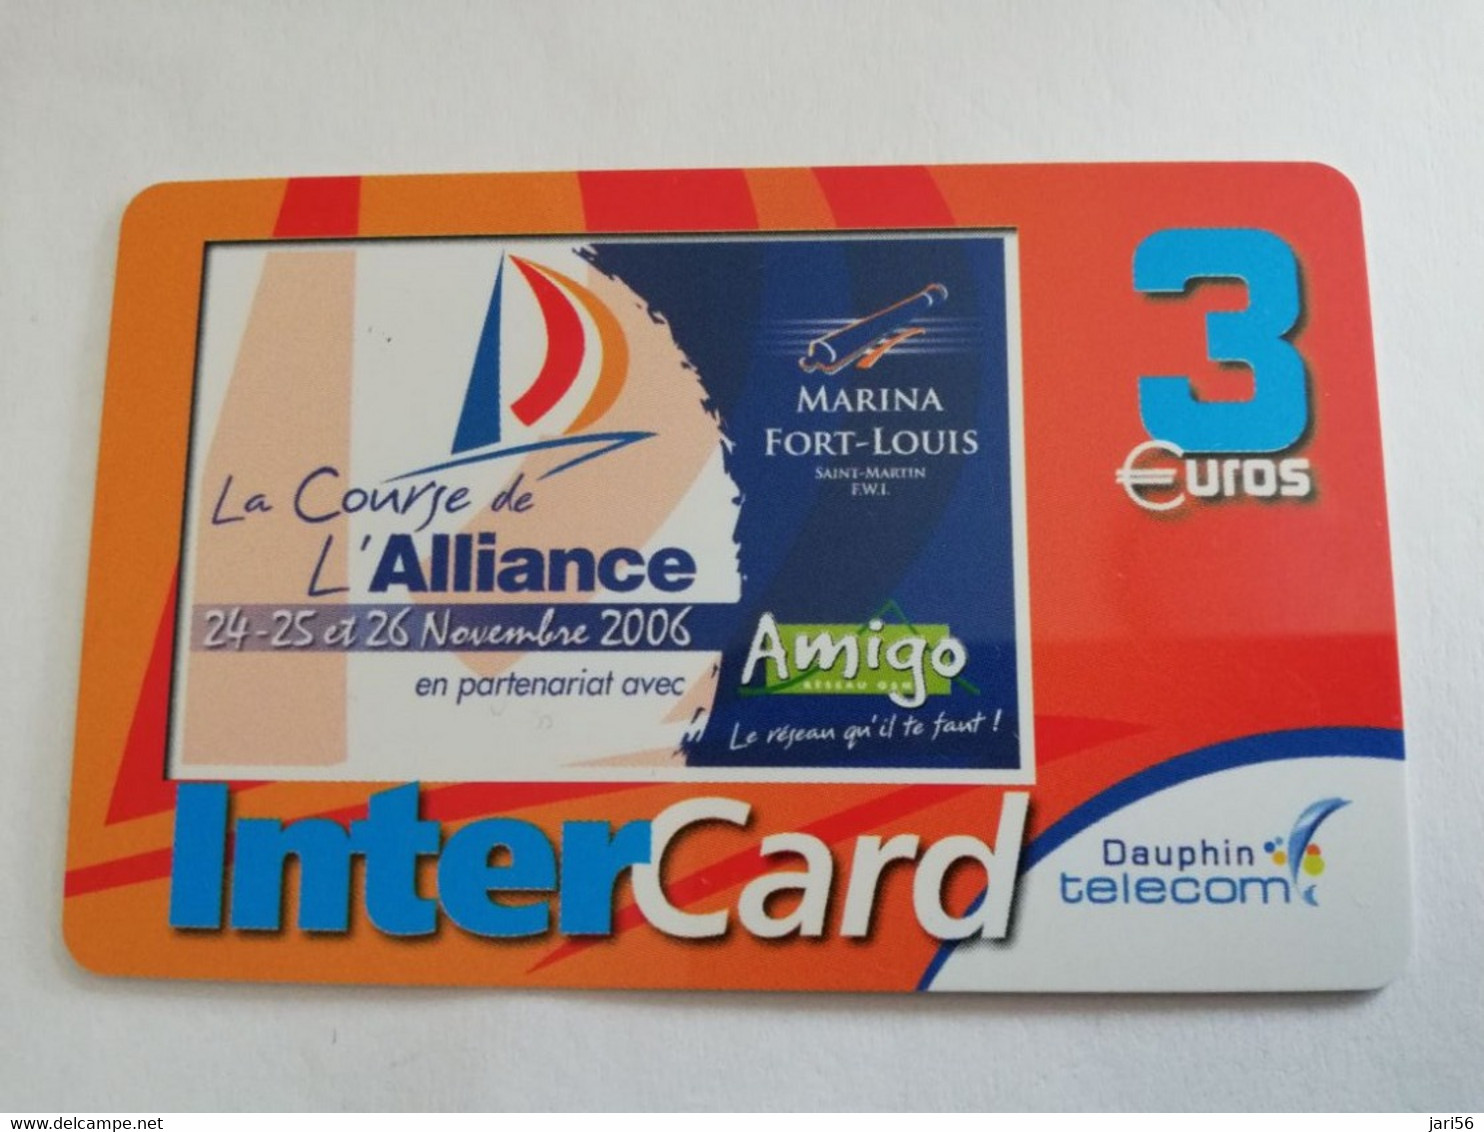 ST MARTIN / INTERCARD  3 EURO    LE COURSE DE ALLIANCE          NO 156   Fine Used Card    ** 6605 ** - Antillen (Französische)